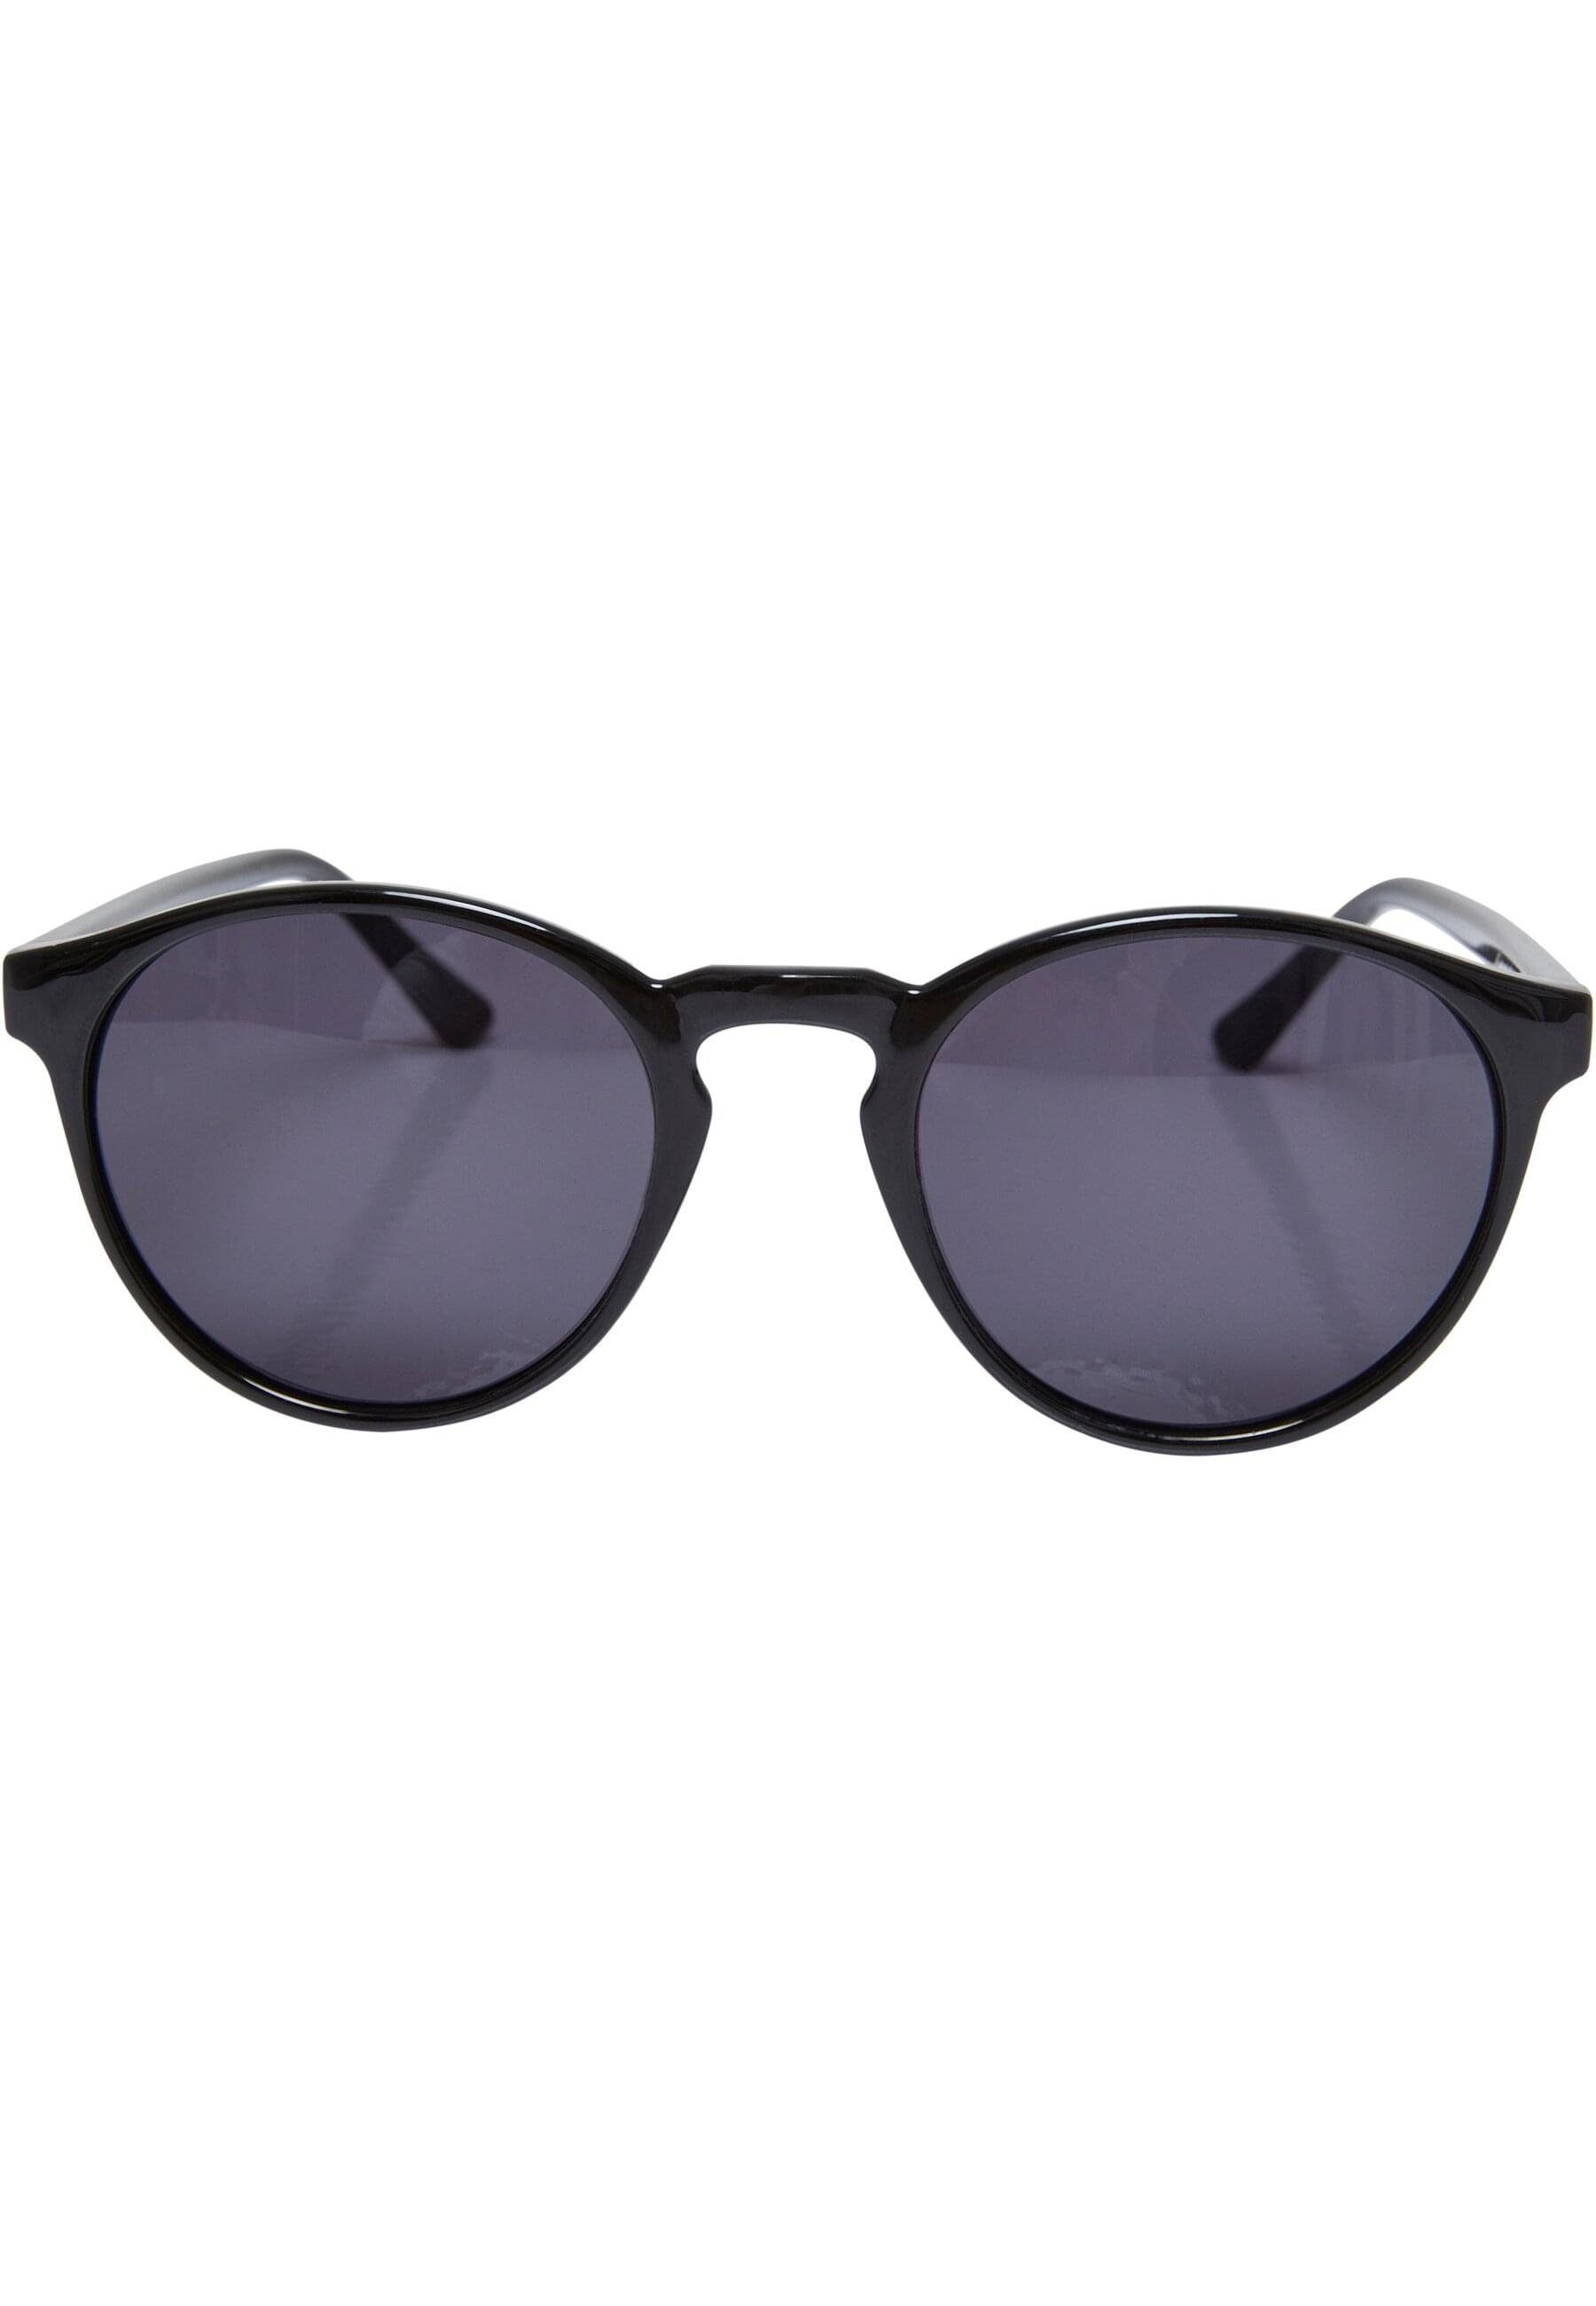 3-Pack URBAN Sonnenbrille Sunglasses Unisex CLASSICS black/palepink/vintagegreen Cypress